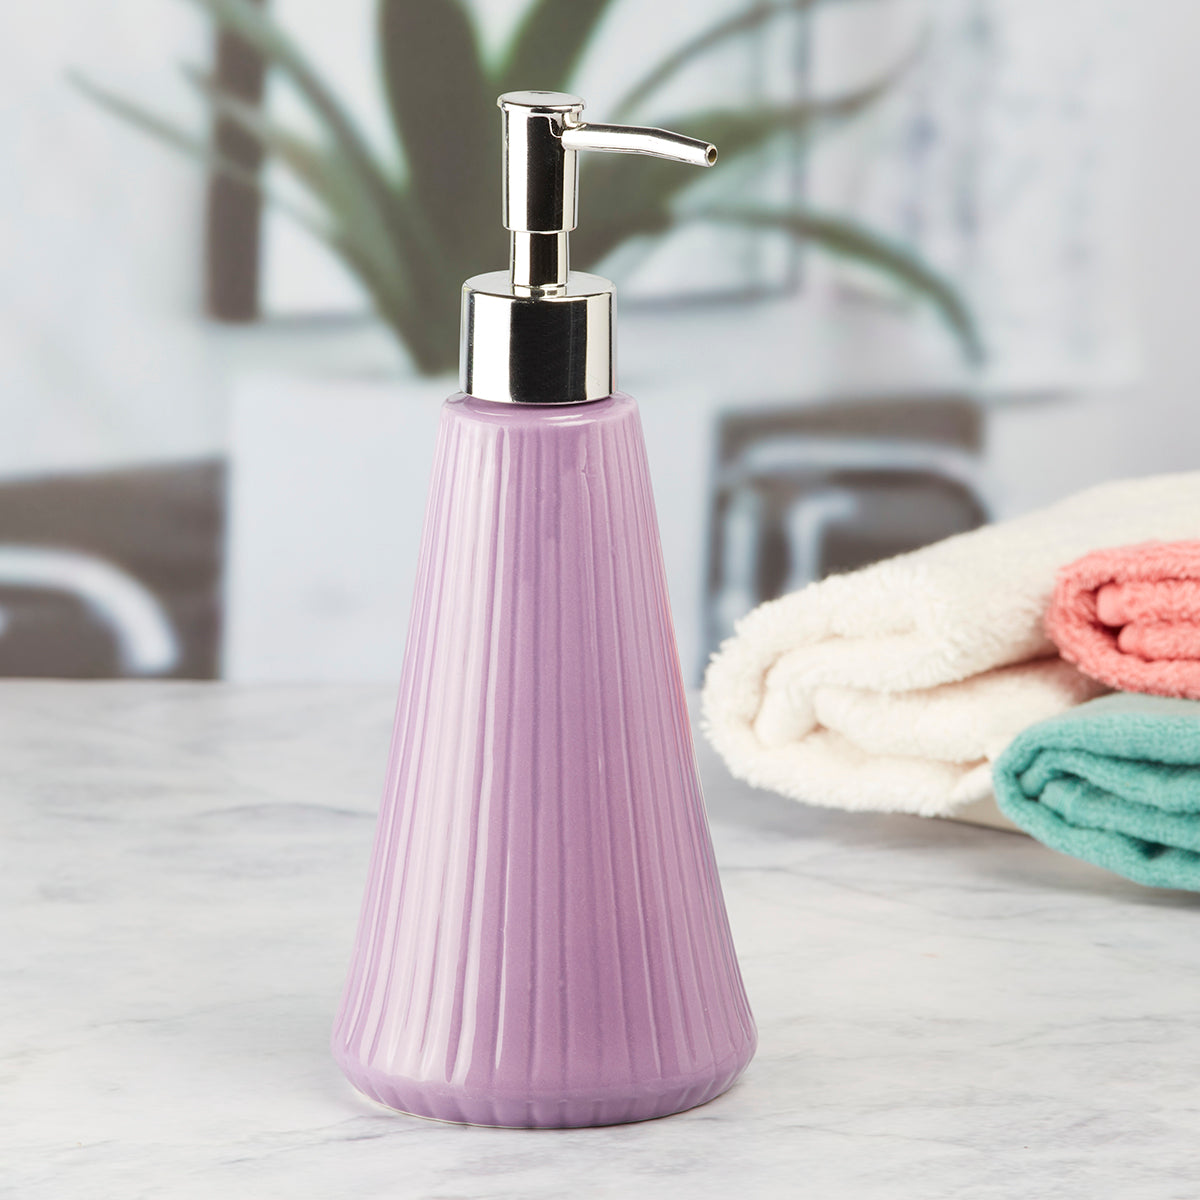 Ceramic Soap Dispenser handwash Pump for Bathroom, Set of 1, Purple (6037)